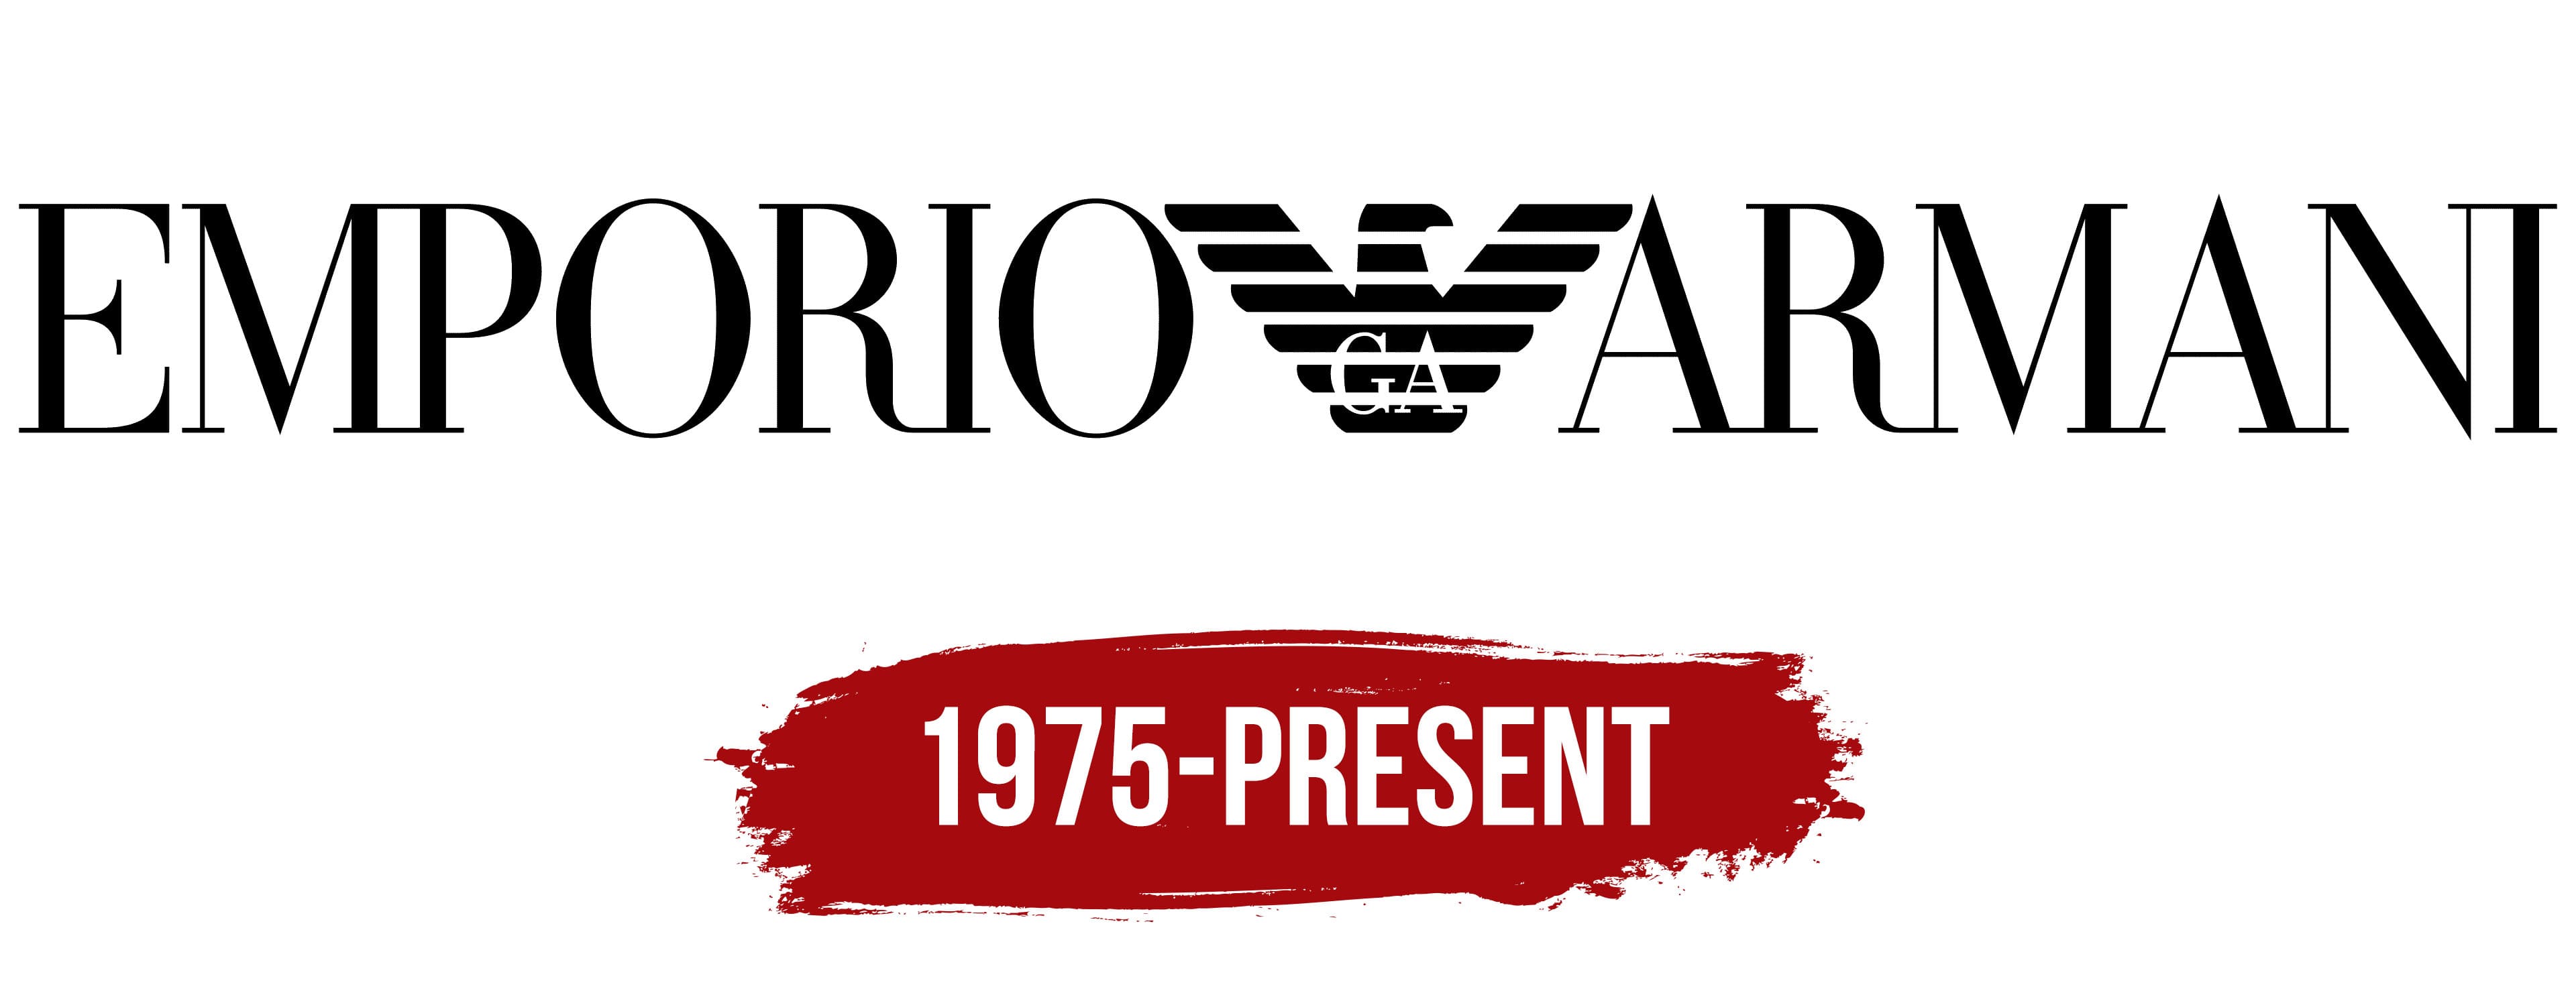 Robijn marketing gastheer Giorgio Armani Logo, symbol, meaning, history, PNG, brand